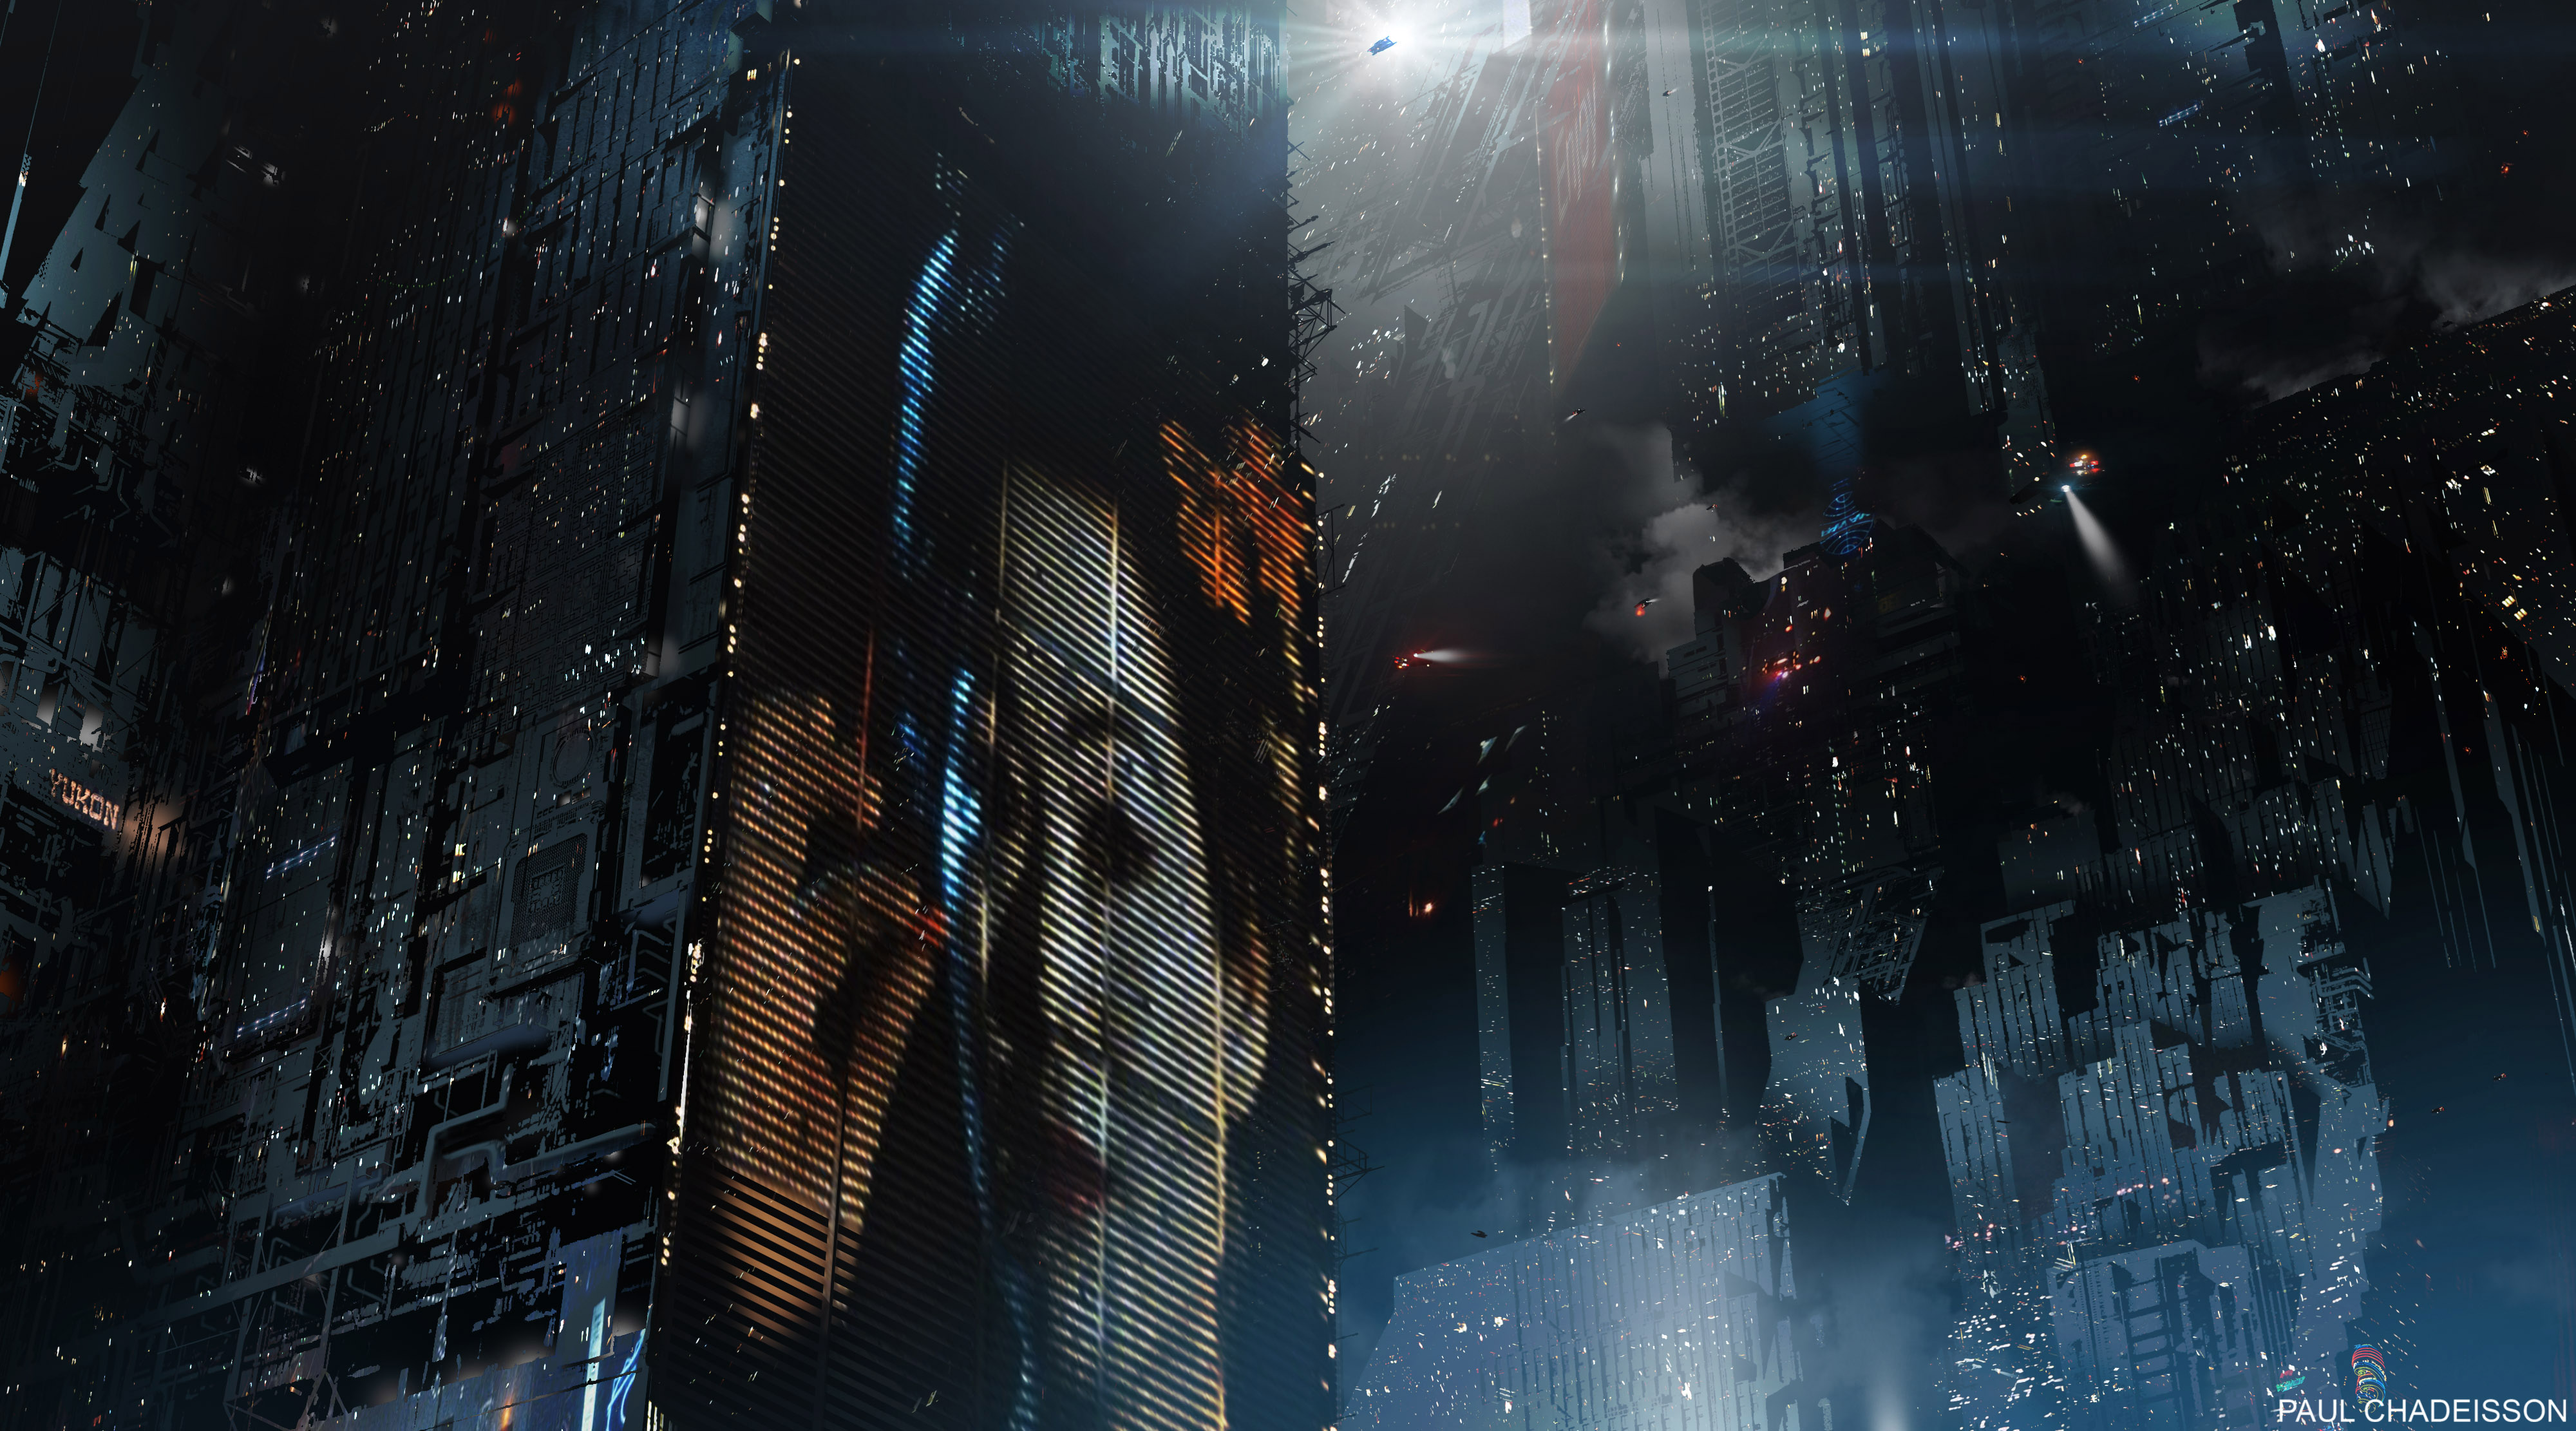 Download Movie Blade Runner 2049 4k Ultra HD Wallpaper by Paul Chadeisson